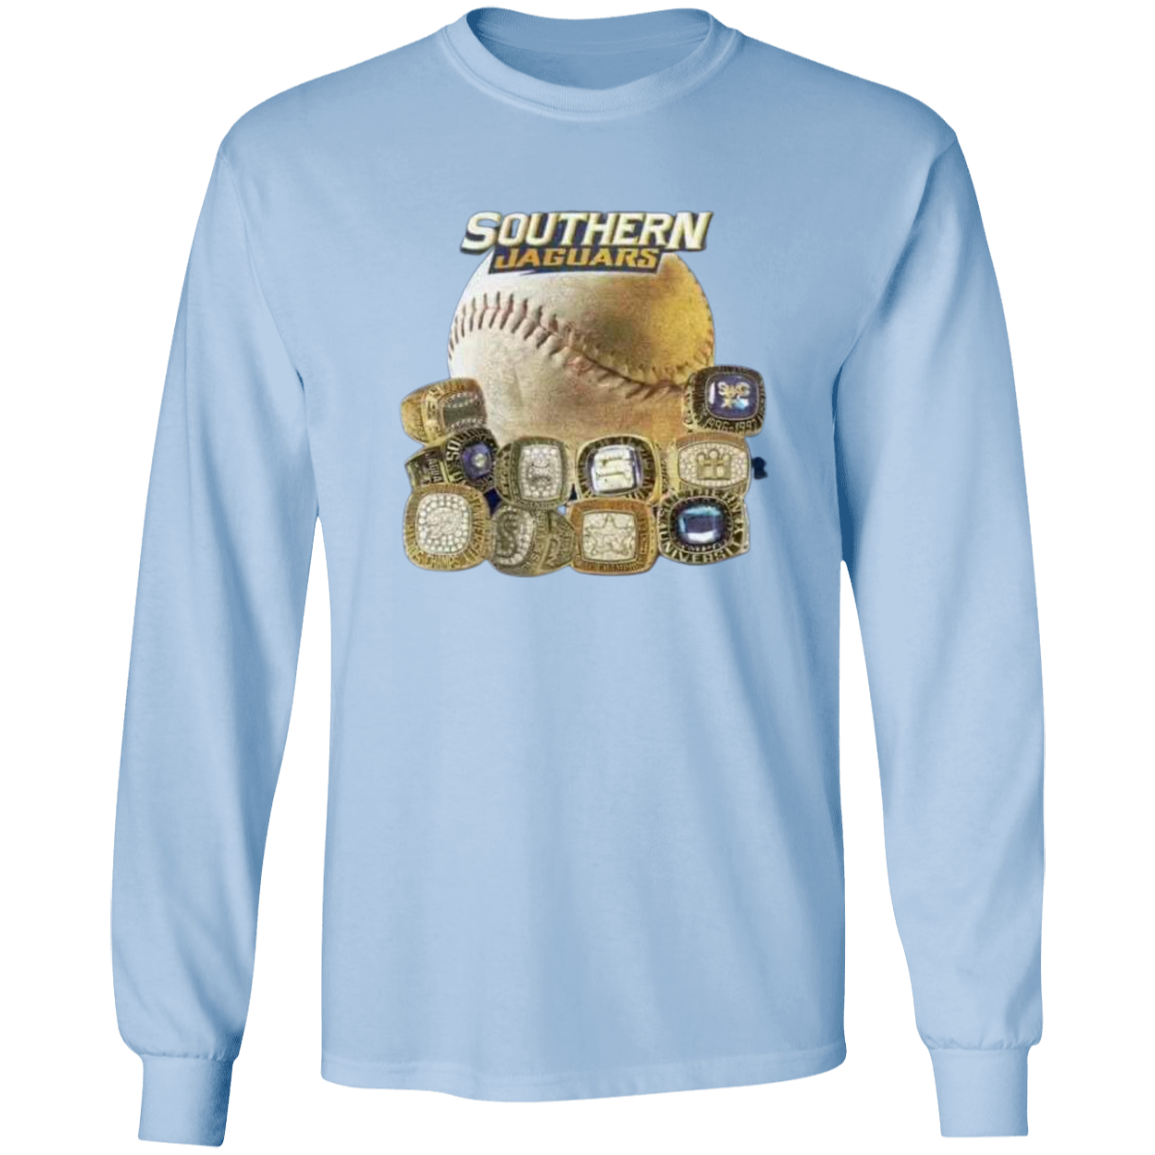 SU Baseball SWAC (Southern Wins Another Championship)  Rings G240 LS Ultra Cotton T-Shirt